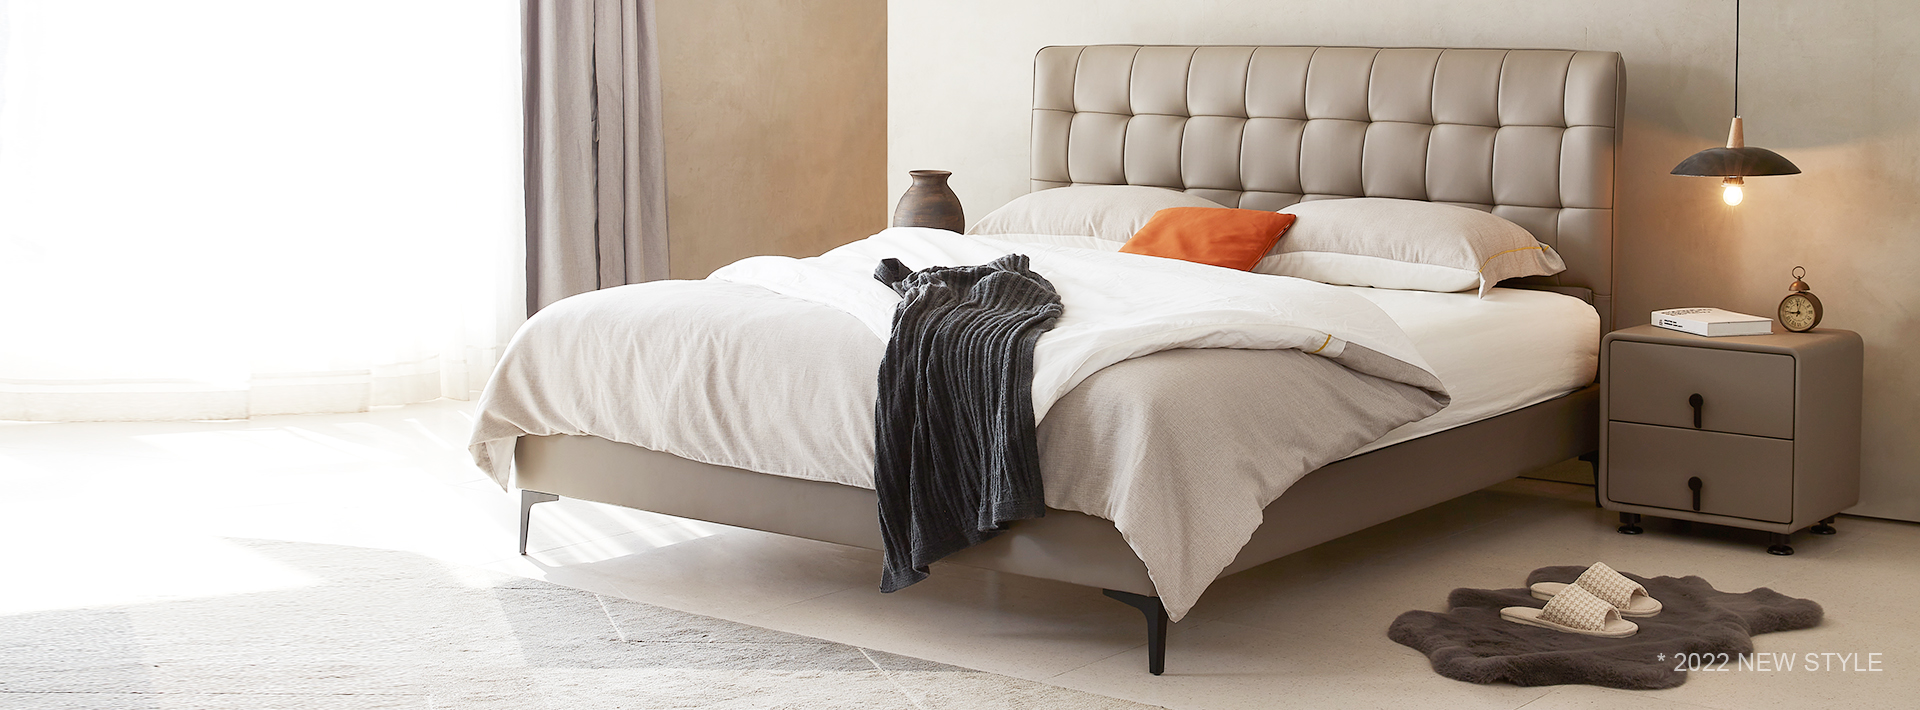 electric adjustable bed OEM from golden furniture